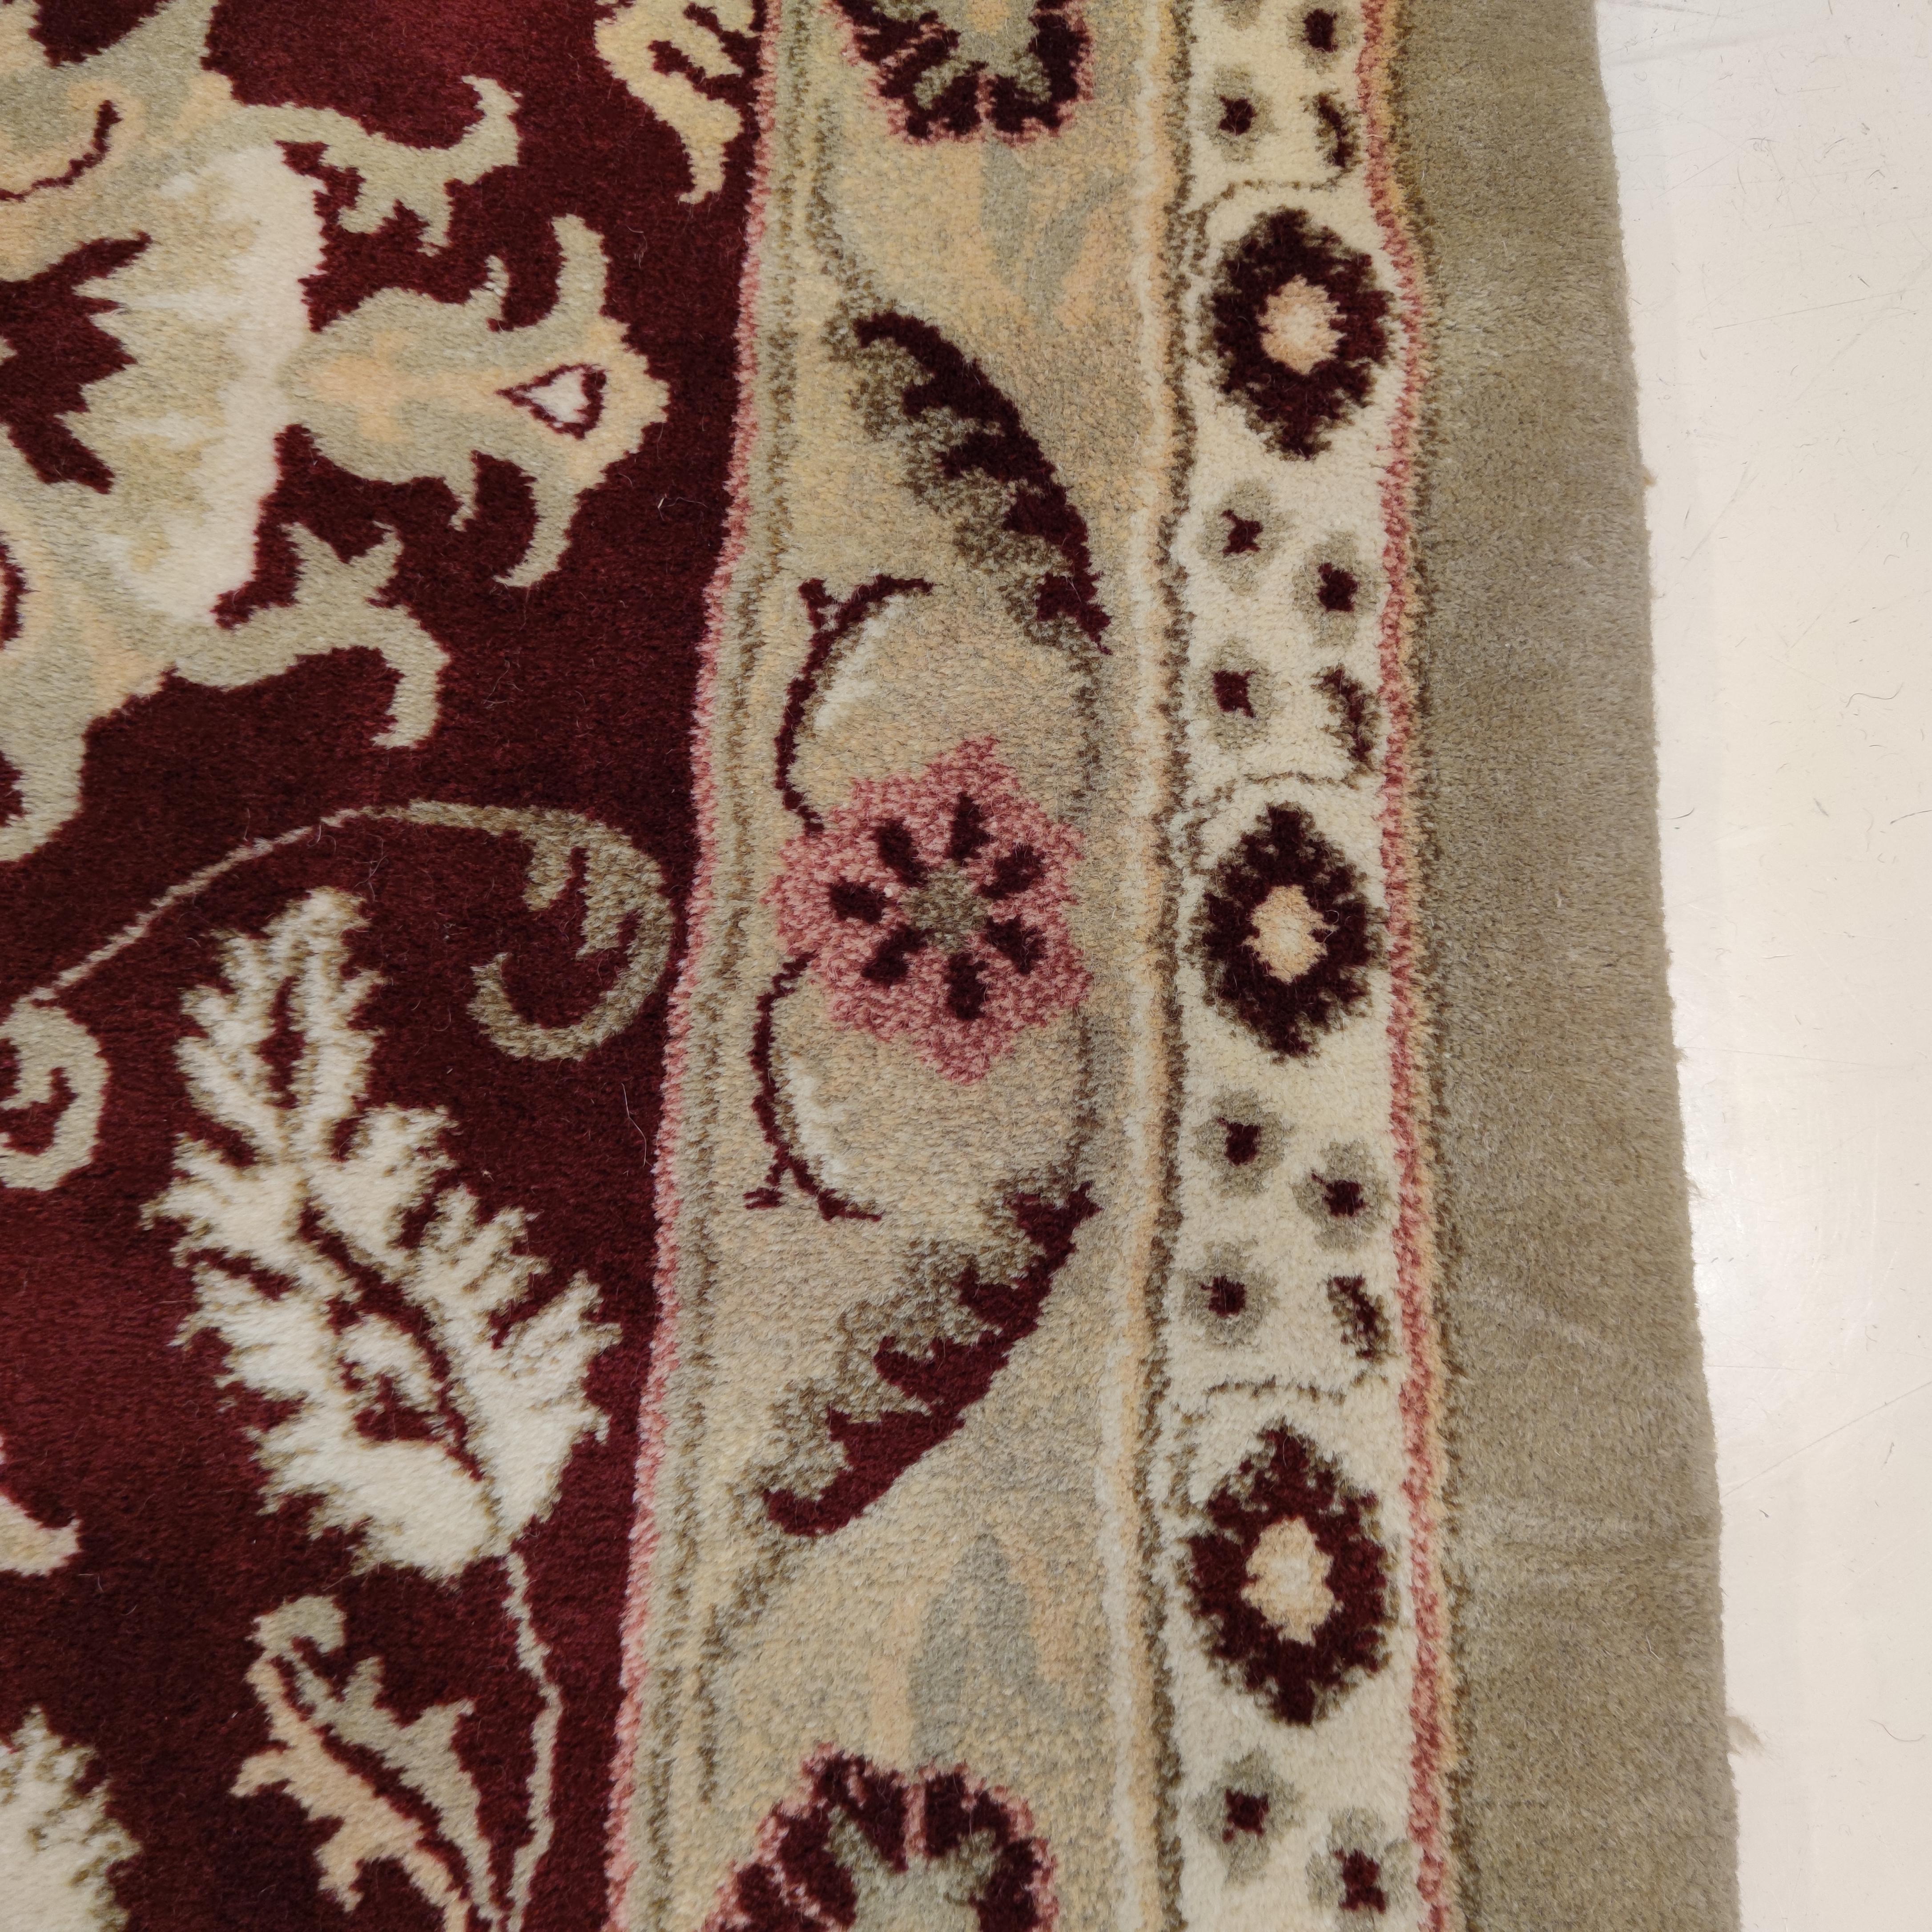 Oversize Vintage Celadon Green All-Over Design Agra Carpet with Ruby Red Border For Sale 5